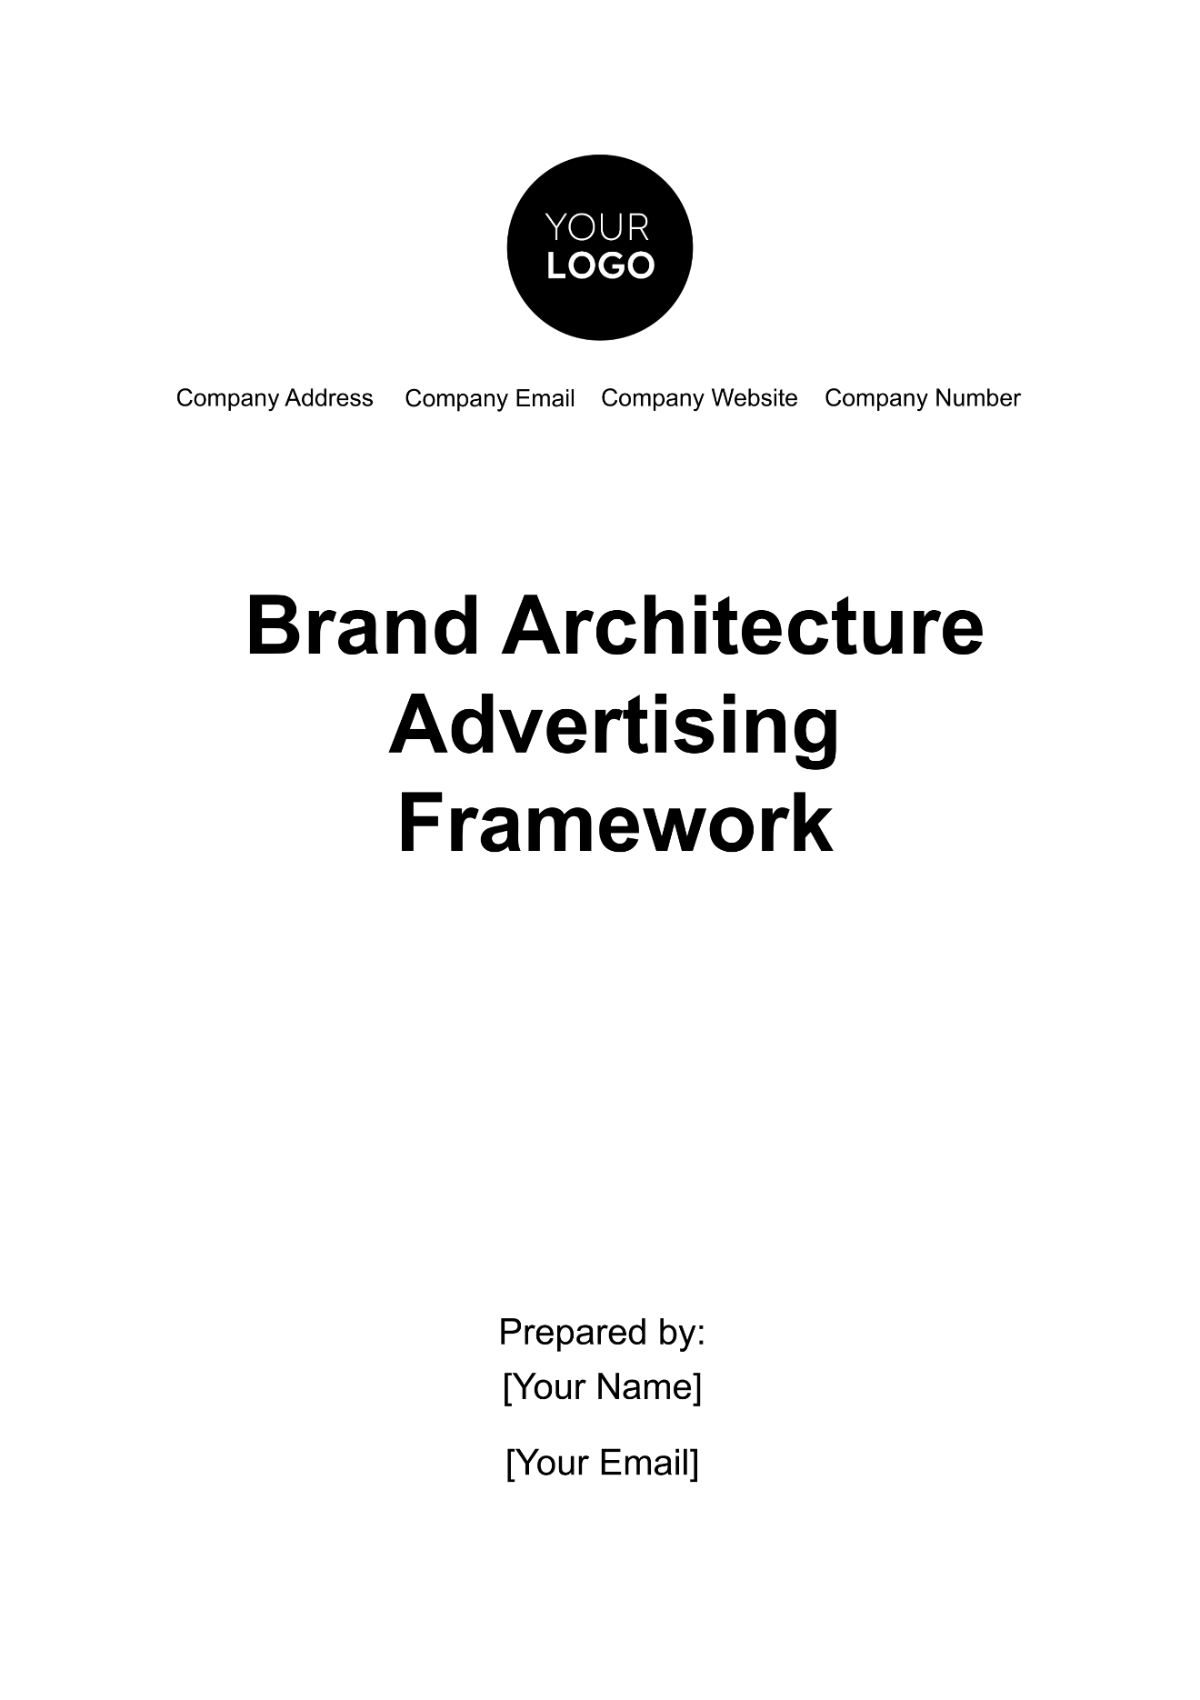 Brand Architecture Advertising Framework Template